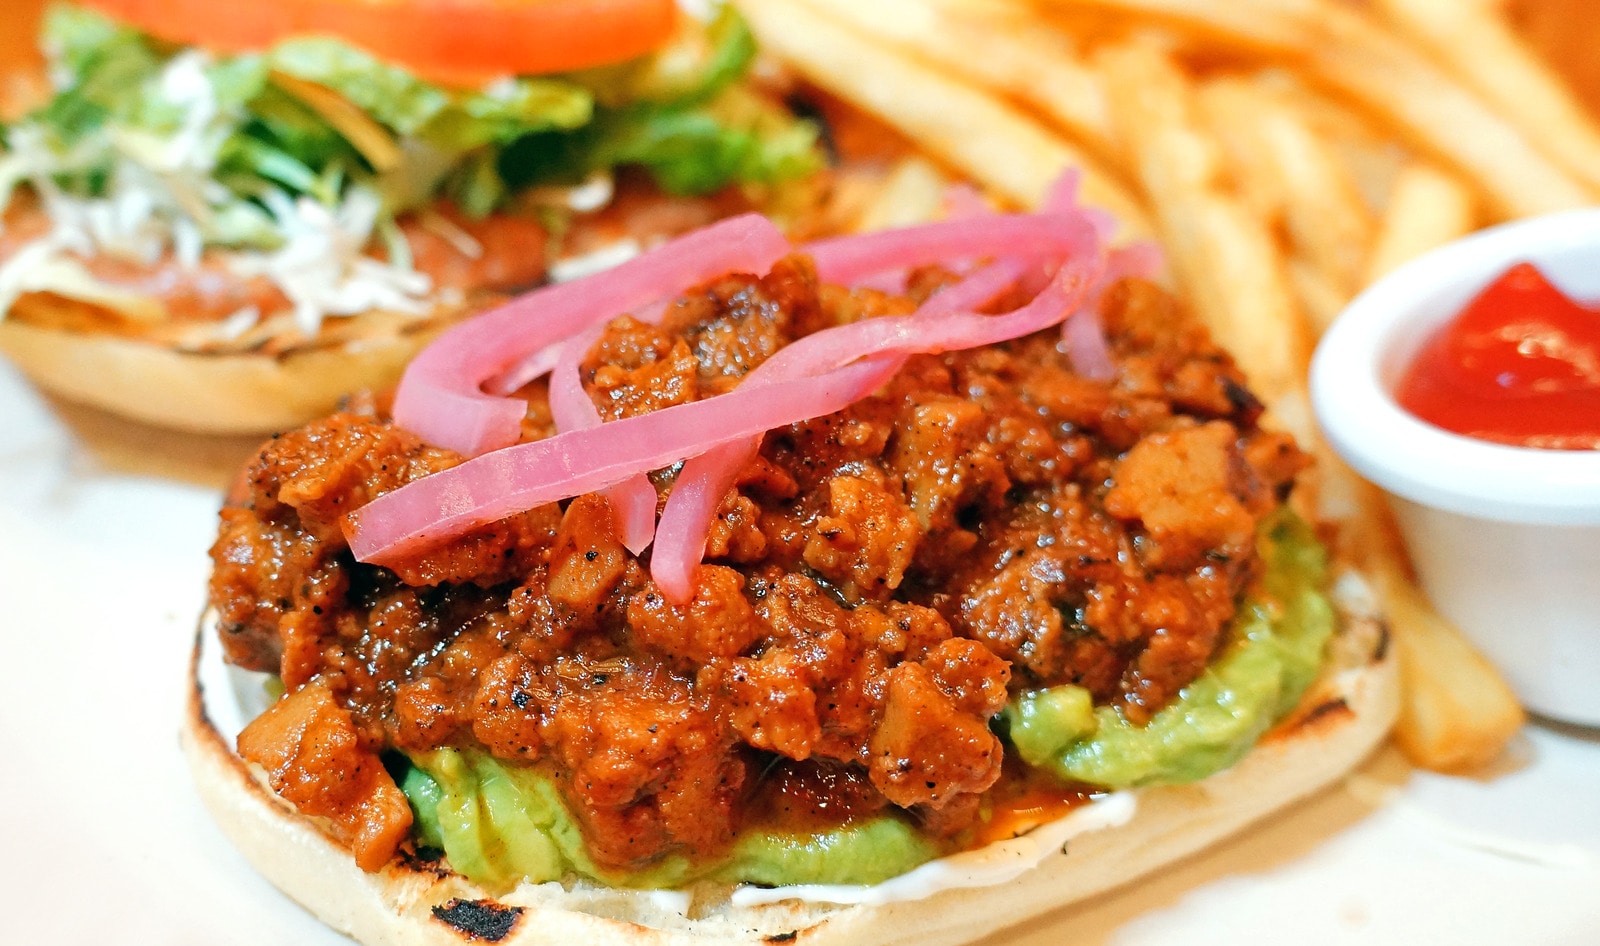 Veggie Grill Adds Vegan Mexican “Street Meat” to Menus Nationwide